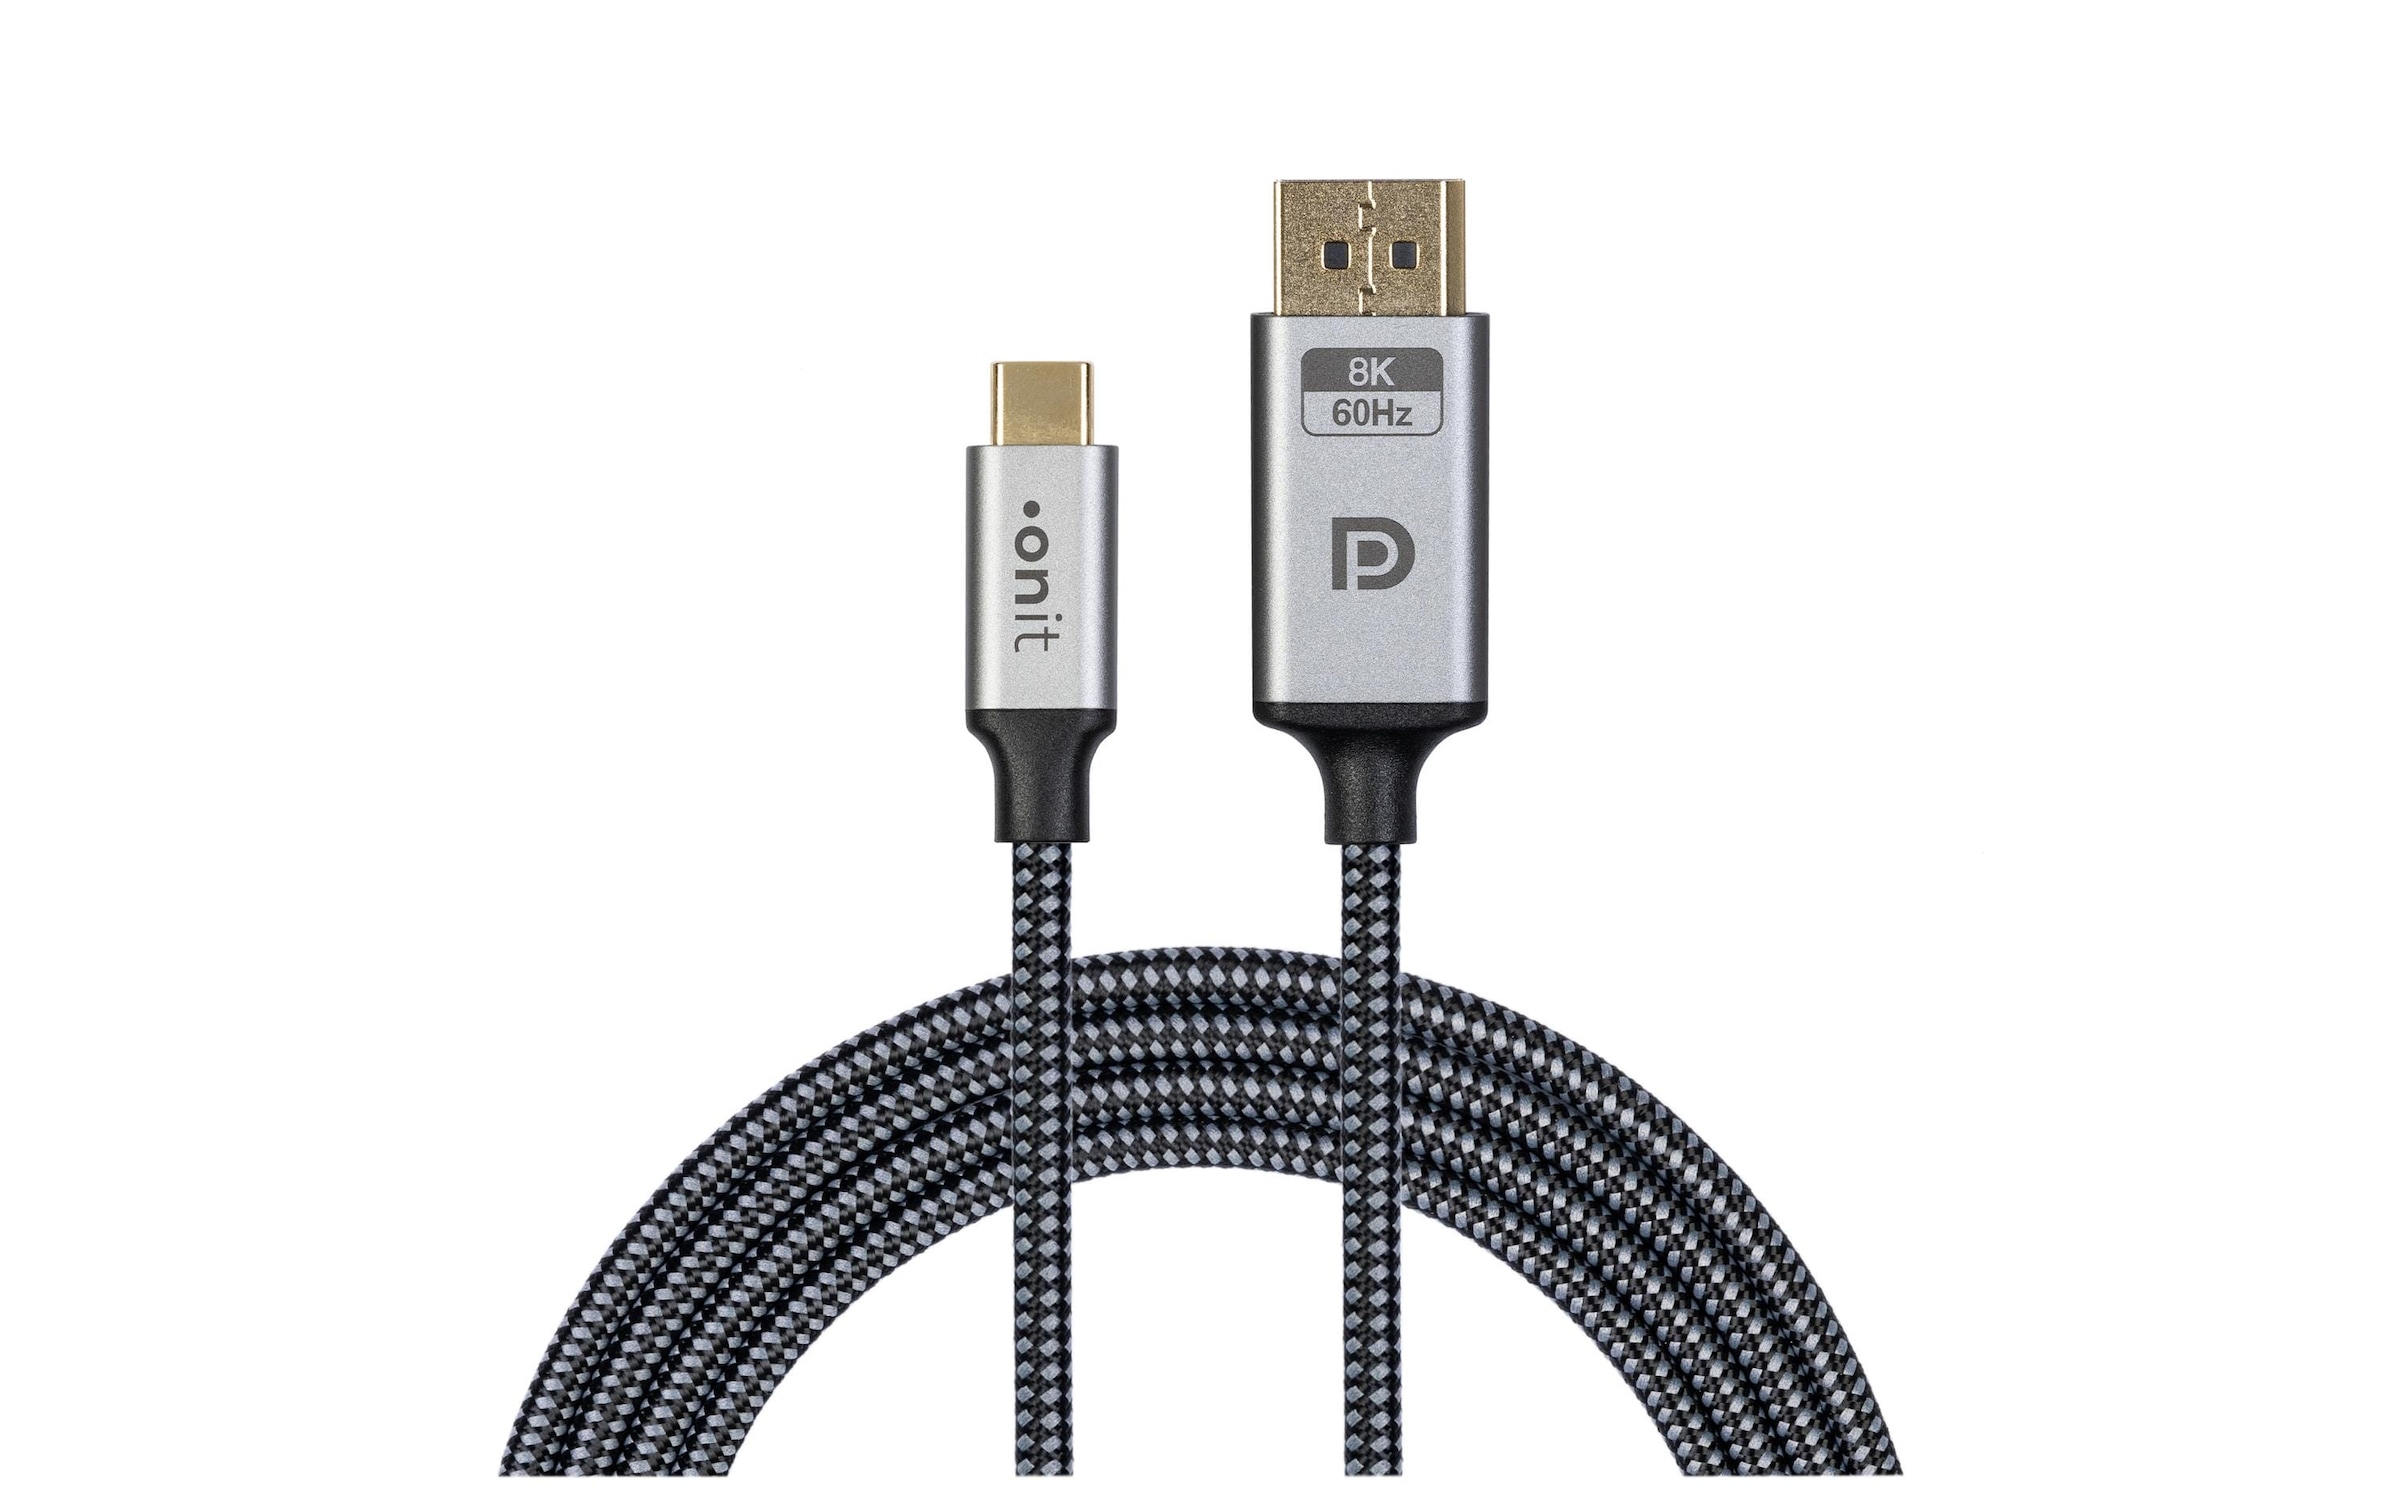 onit USB-Kabel »USB Type-C - DisplayPort, 1 m«, 100 cm